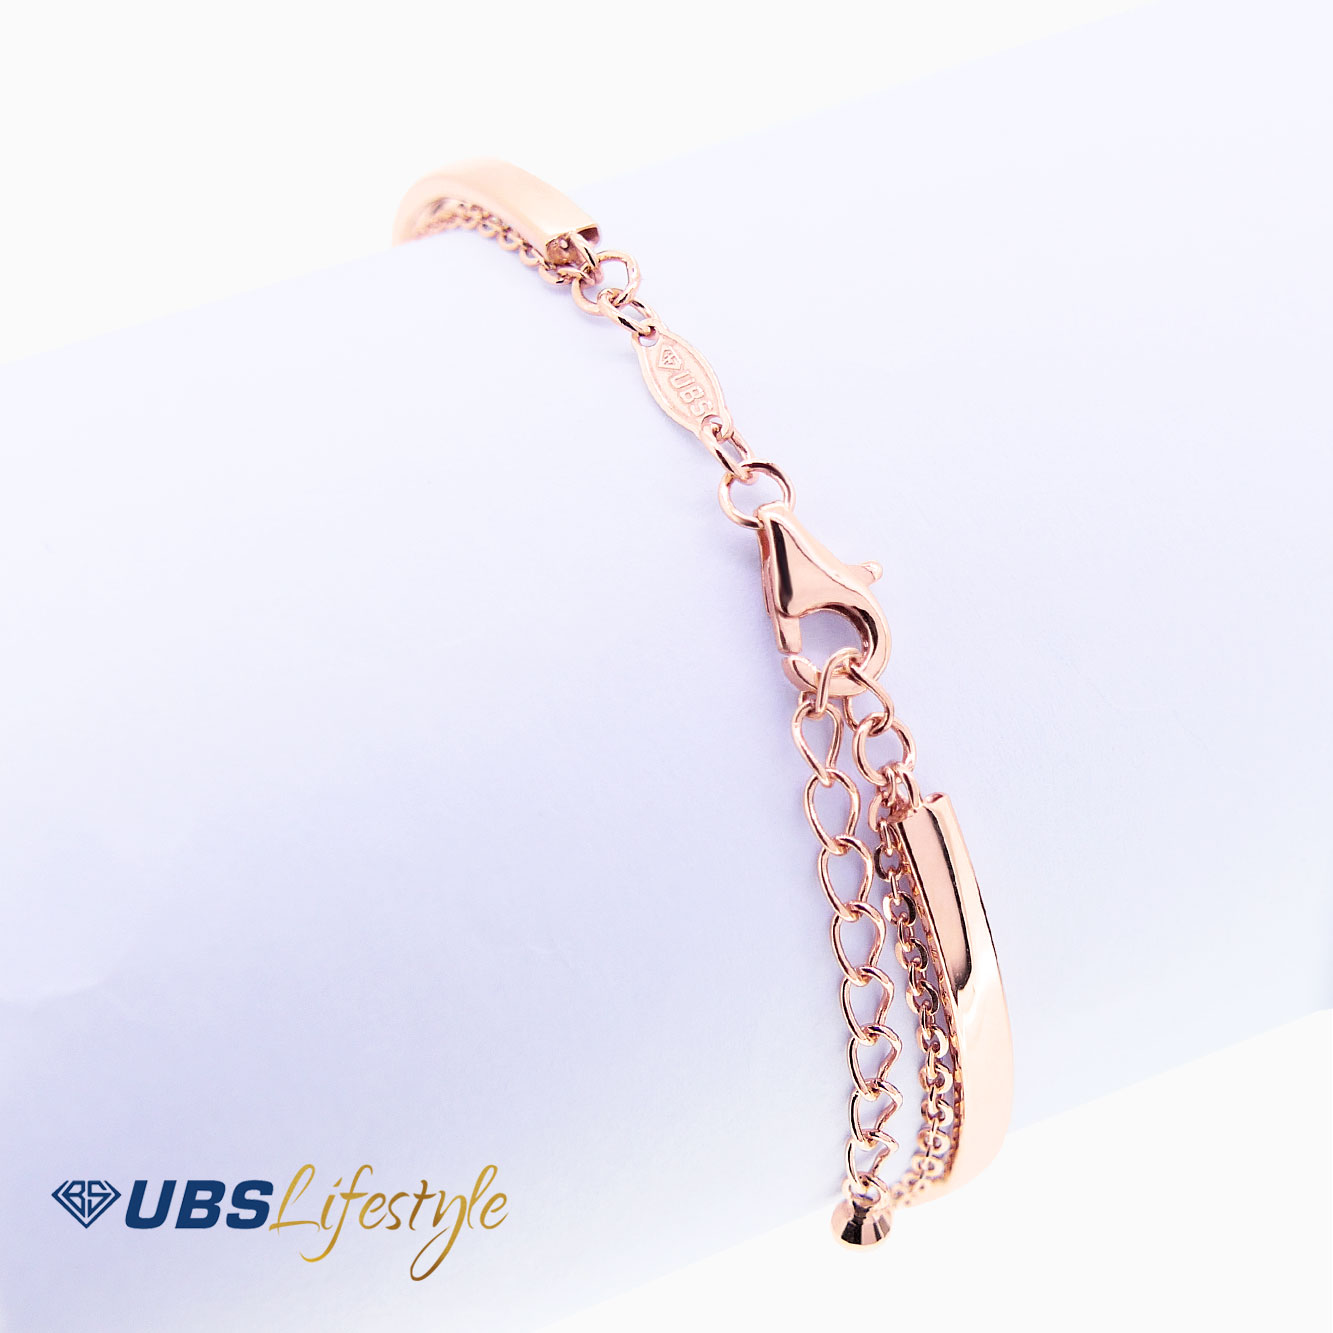 GELANG EMAS UBS  UBSLifestyle Perhiasan  Emas Gold  Jewelry